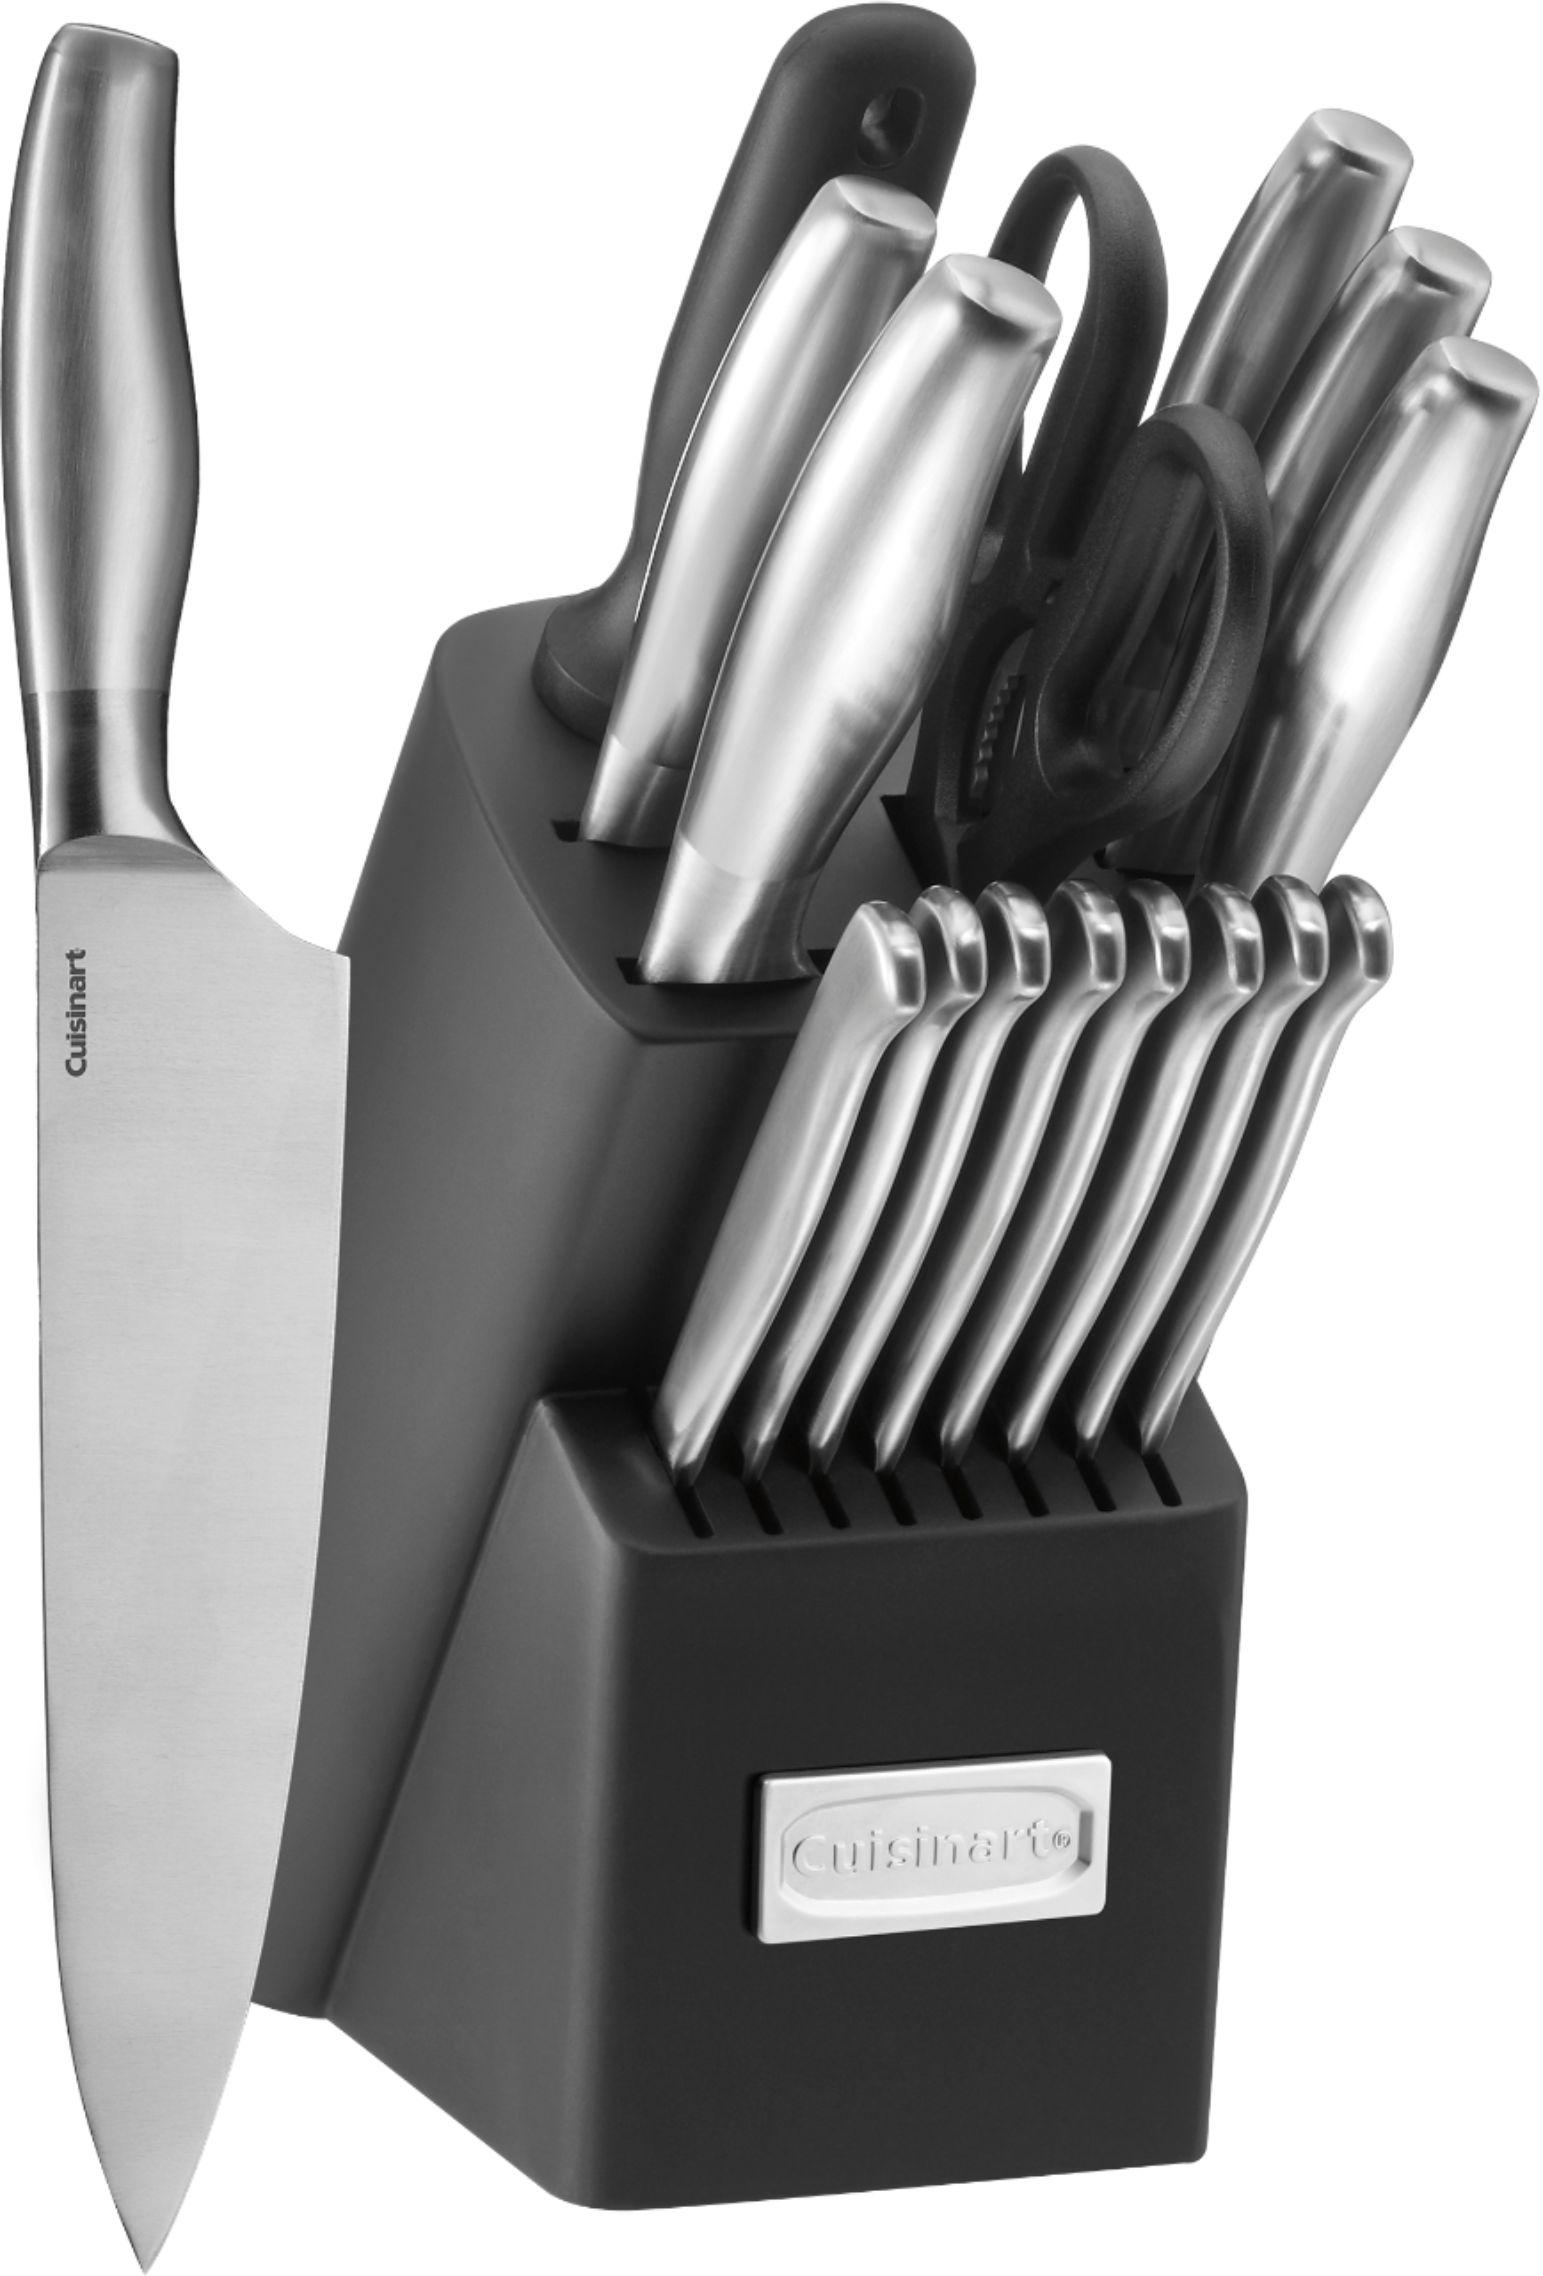 Cuisinart – 17 PC Artiste Knife Block Set – Silver – Just $49.99 at Best Buy